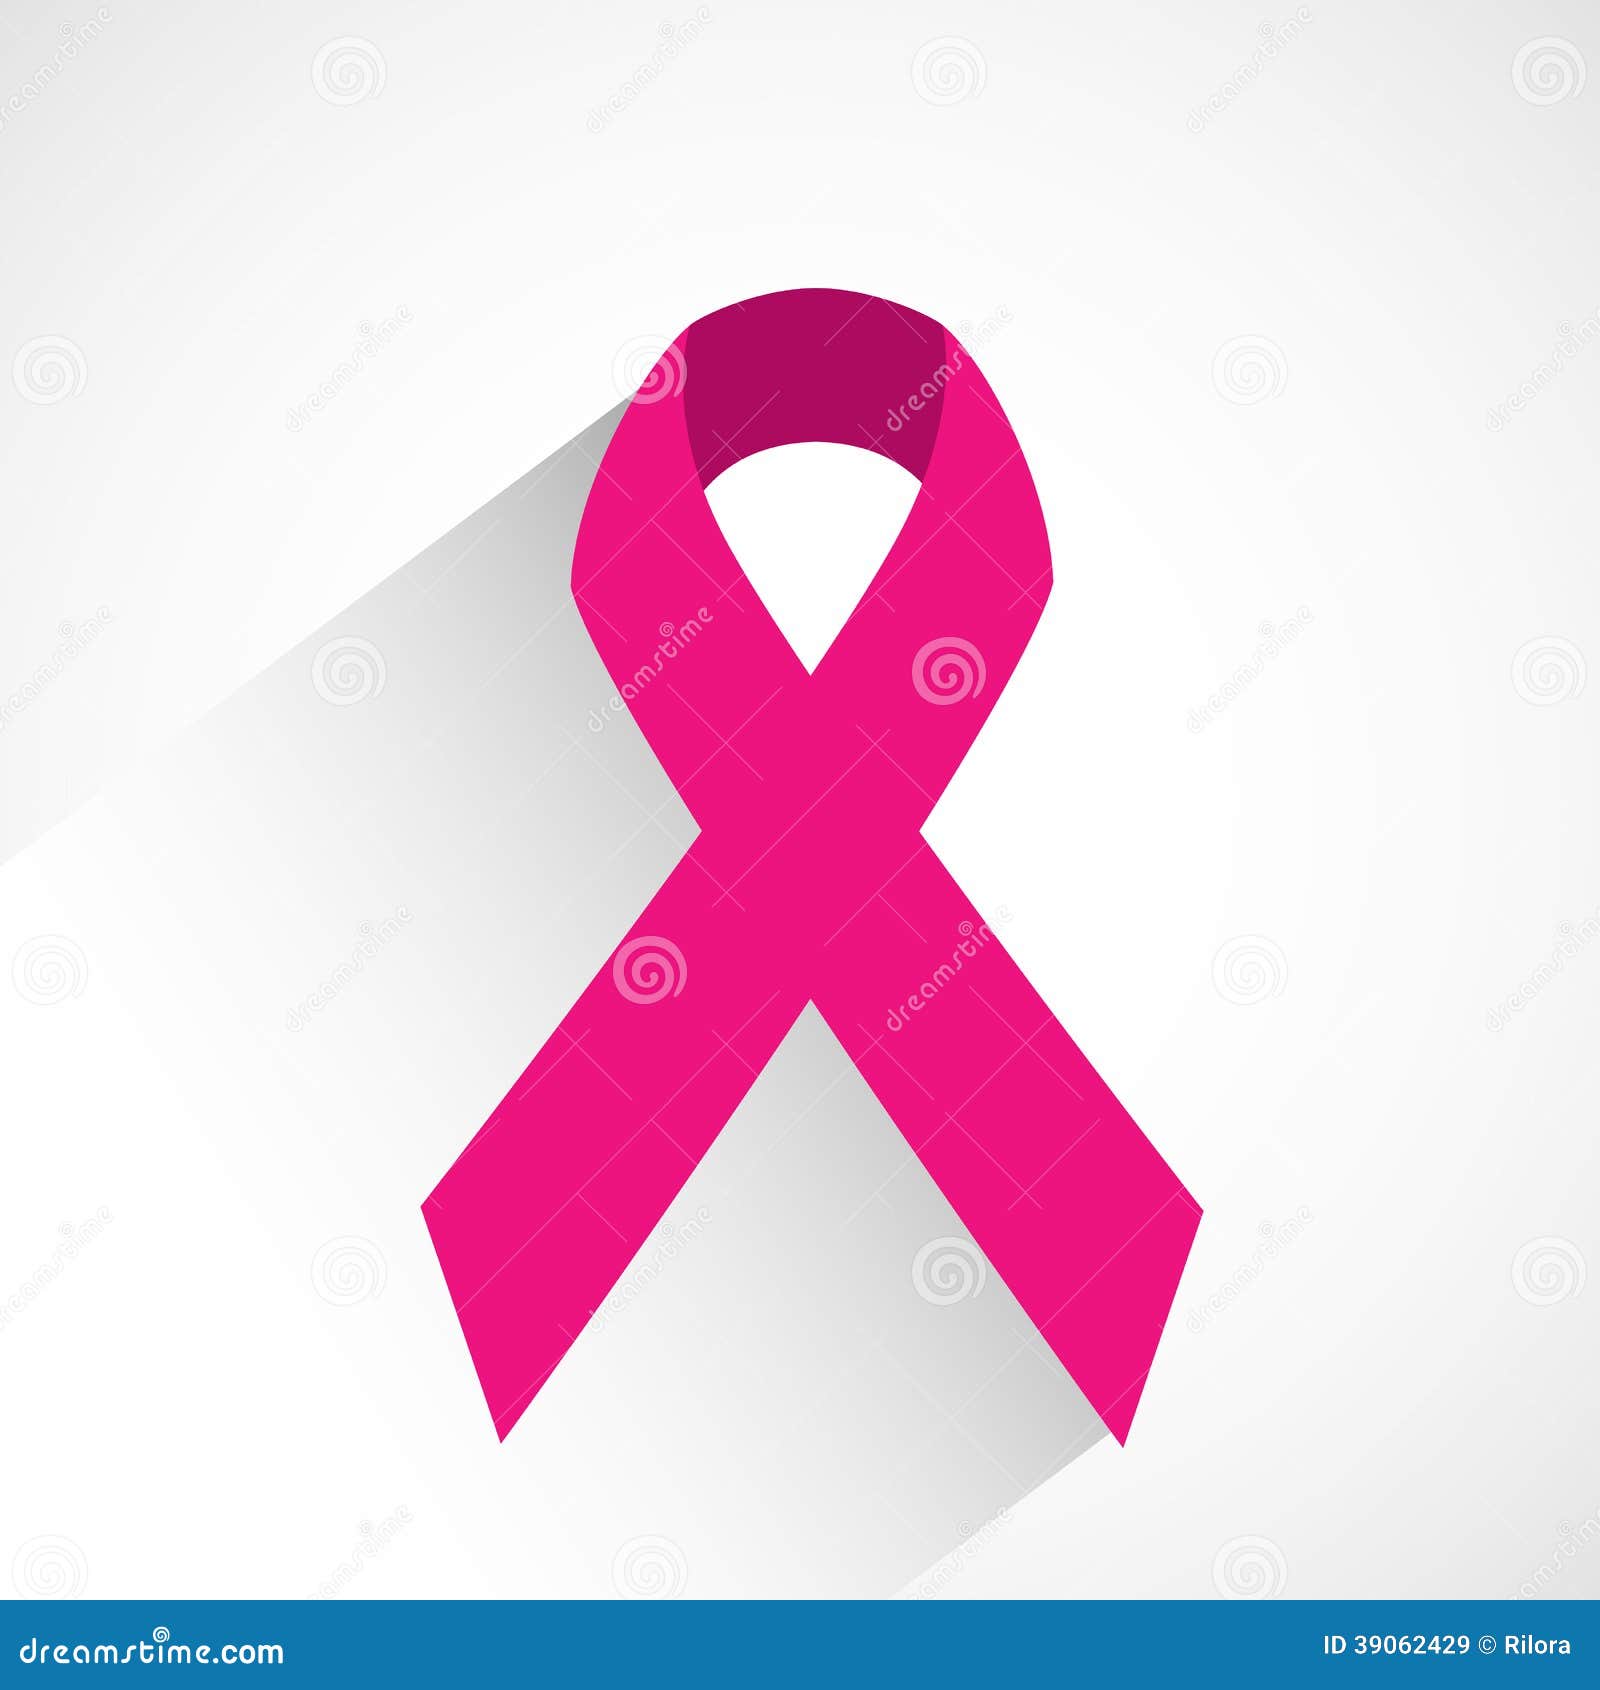 lung cancer logo clip art free - photo #30